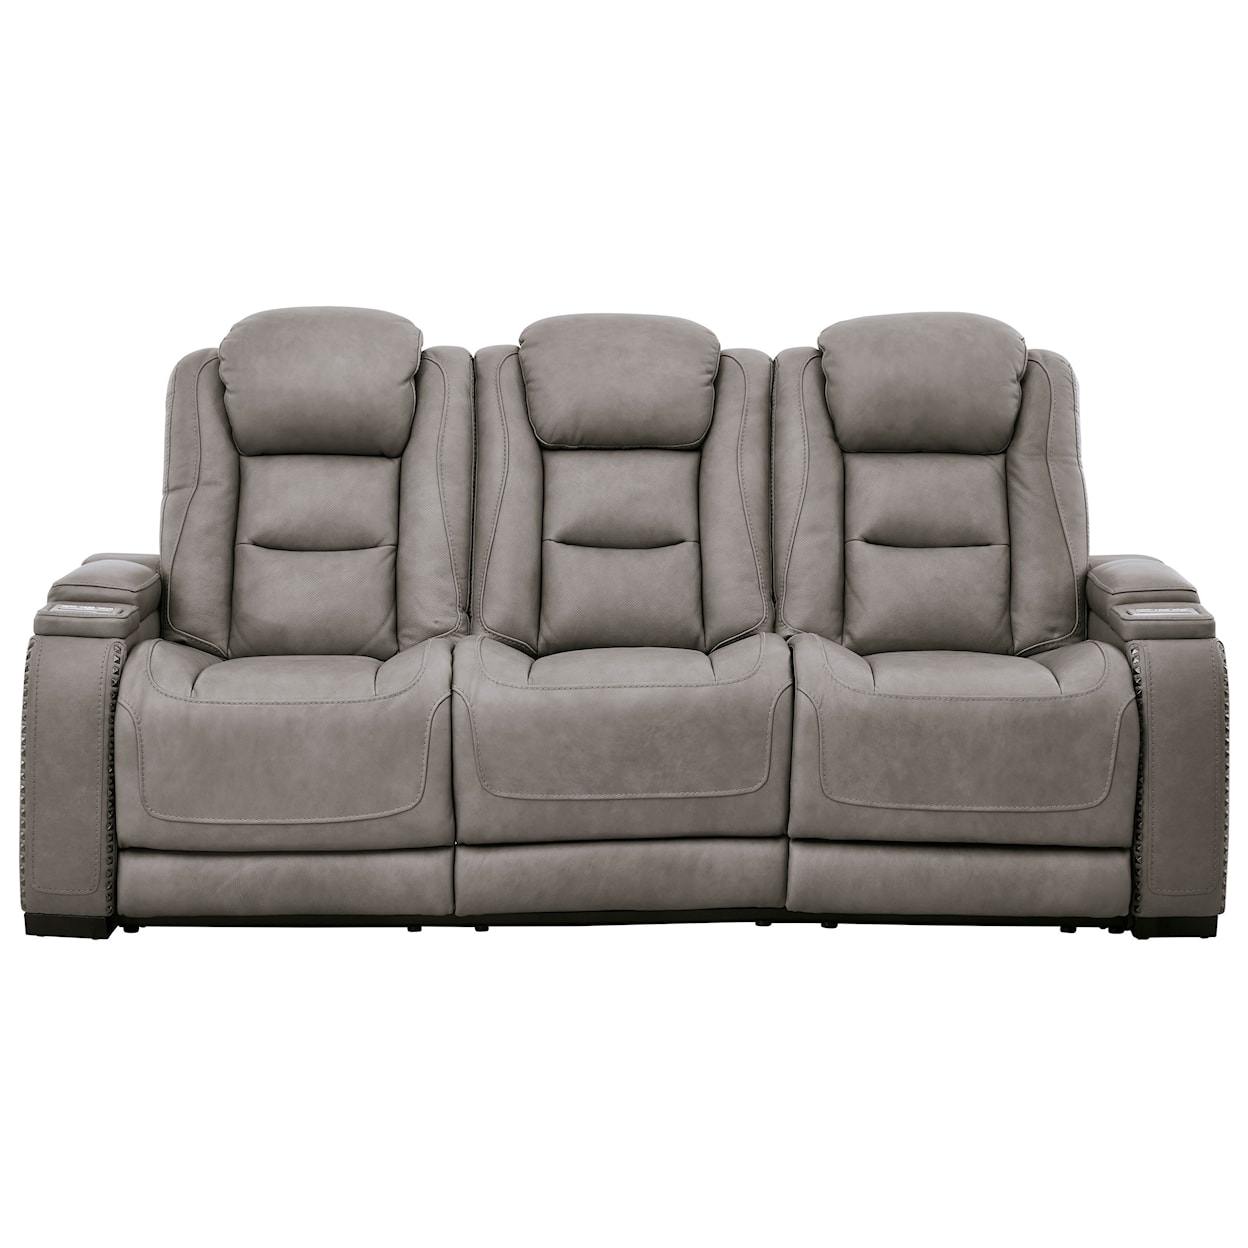 Signature Design The Man-Den Power Reclining Sofa with Adjustable HR